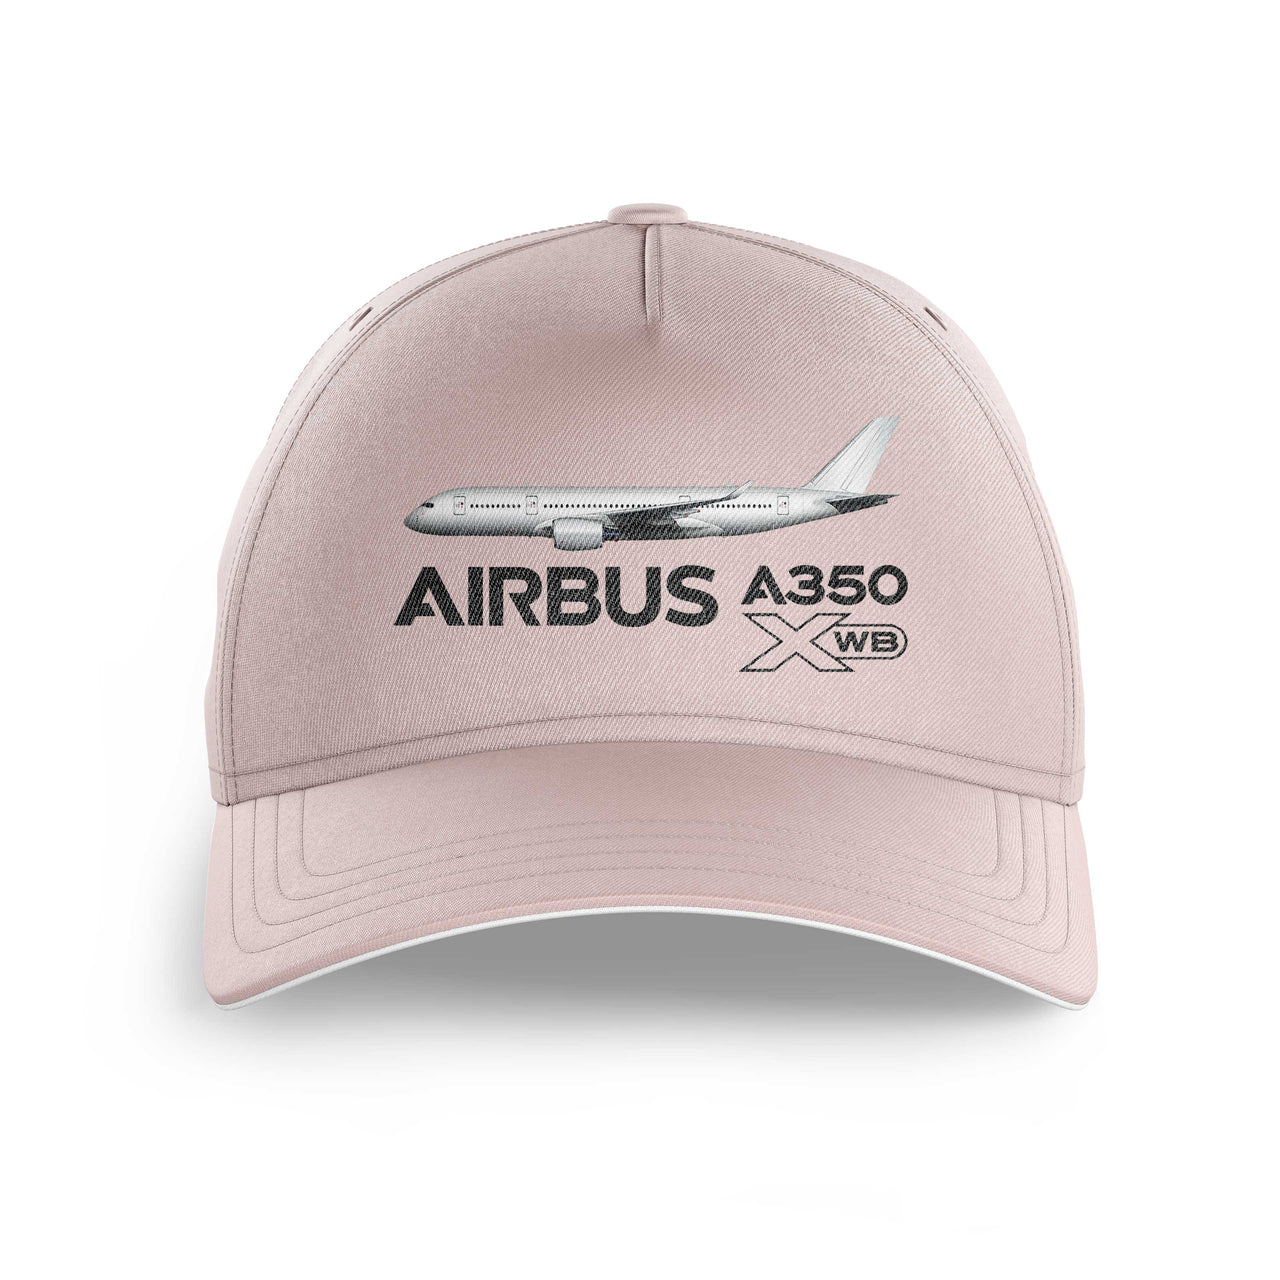 The Airbus A350 XWB Printed Hats